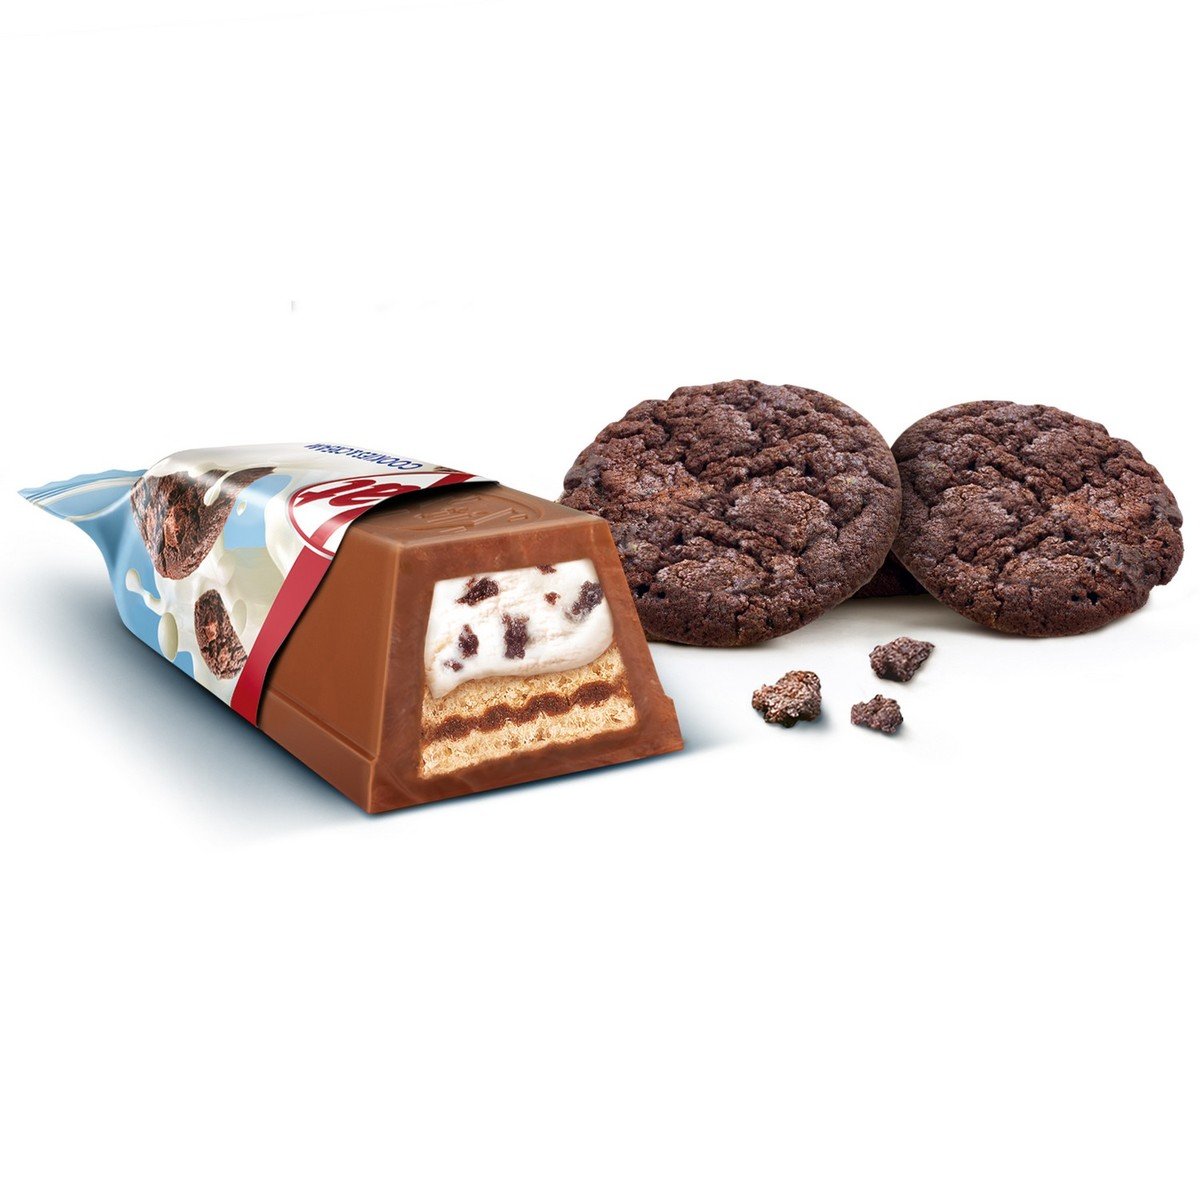 Nestle KitKat Cookies And Cream Mini Moments 140 g